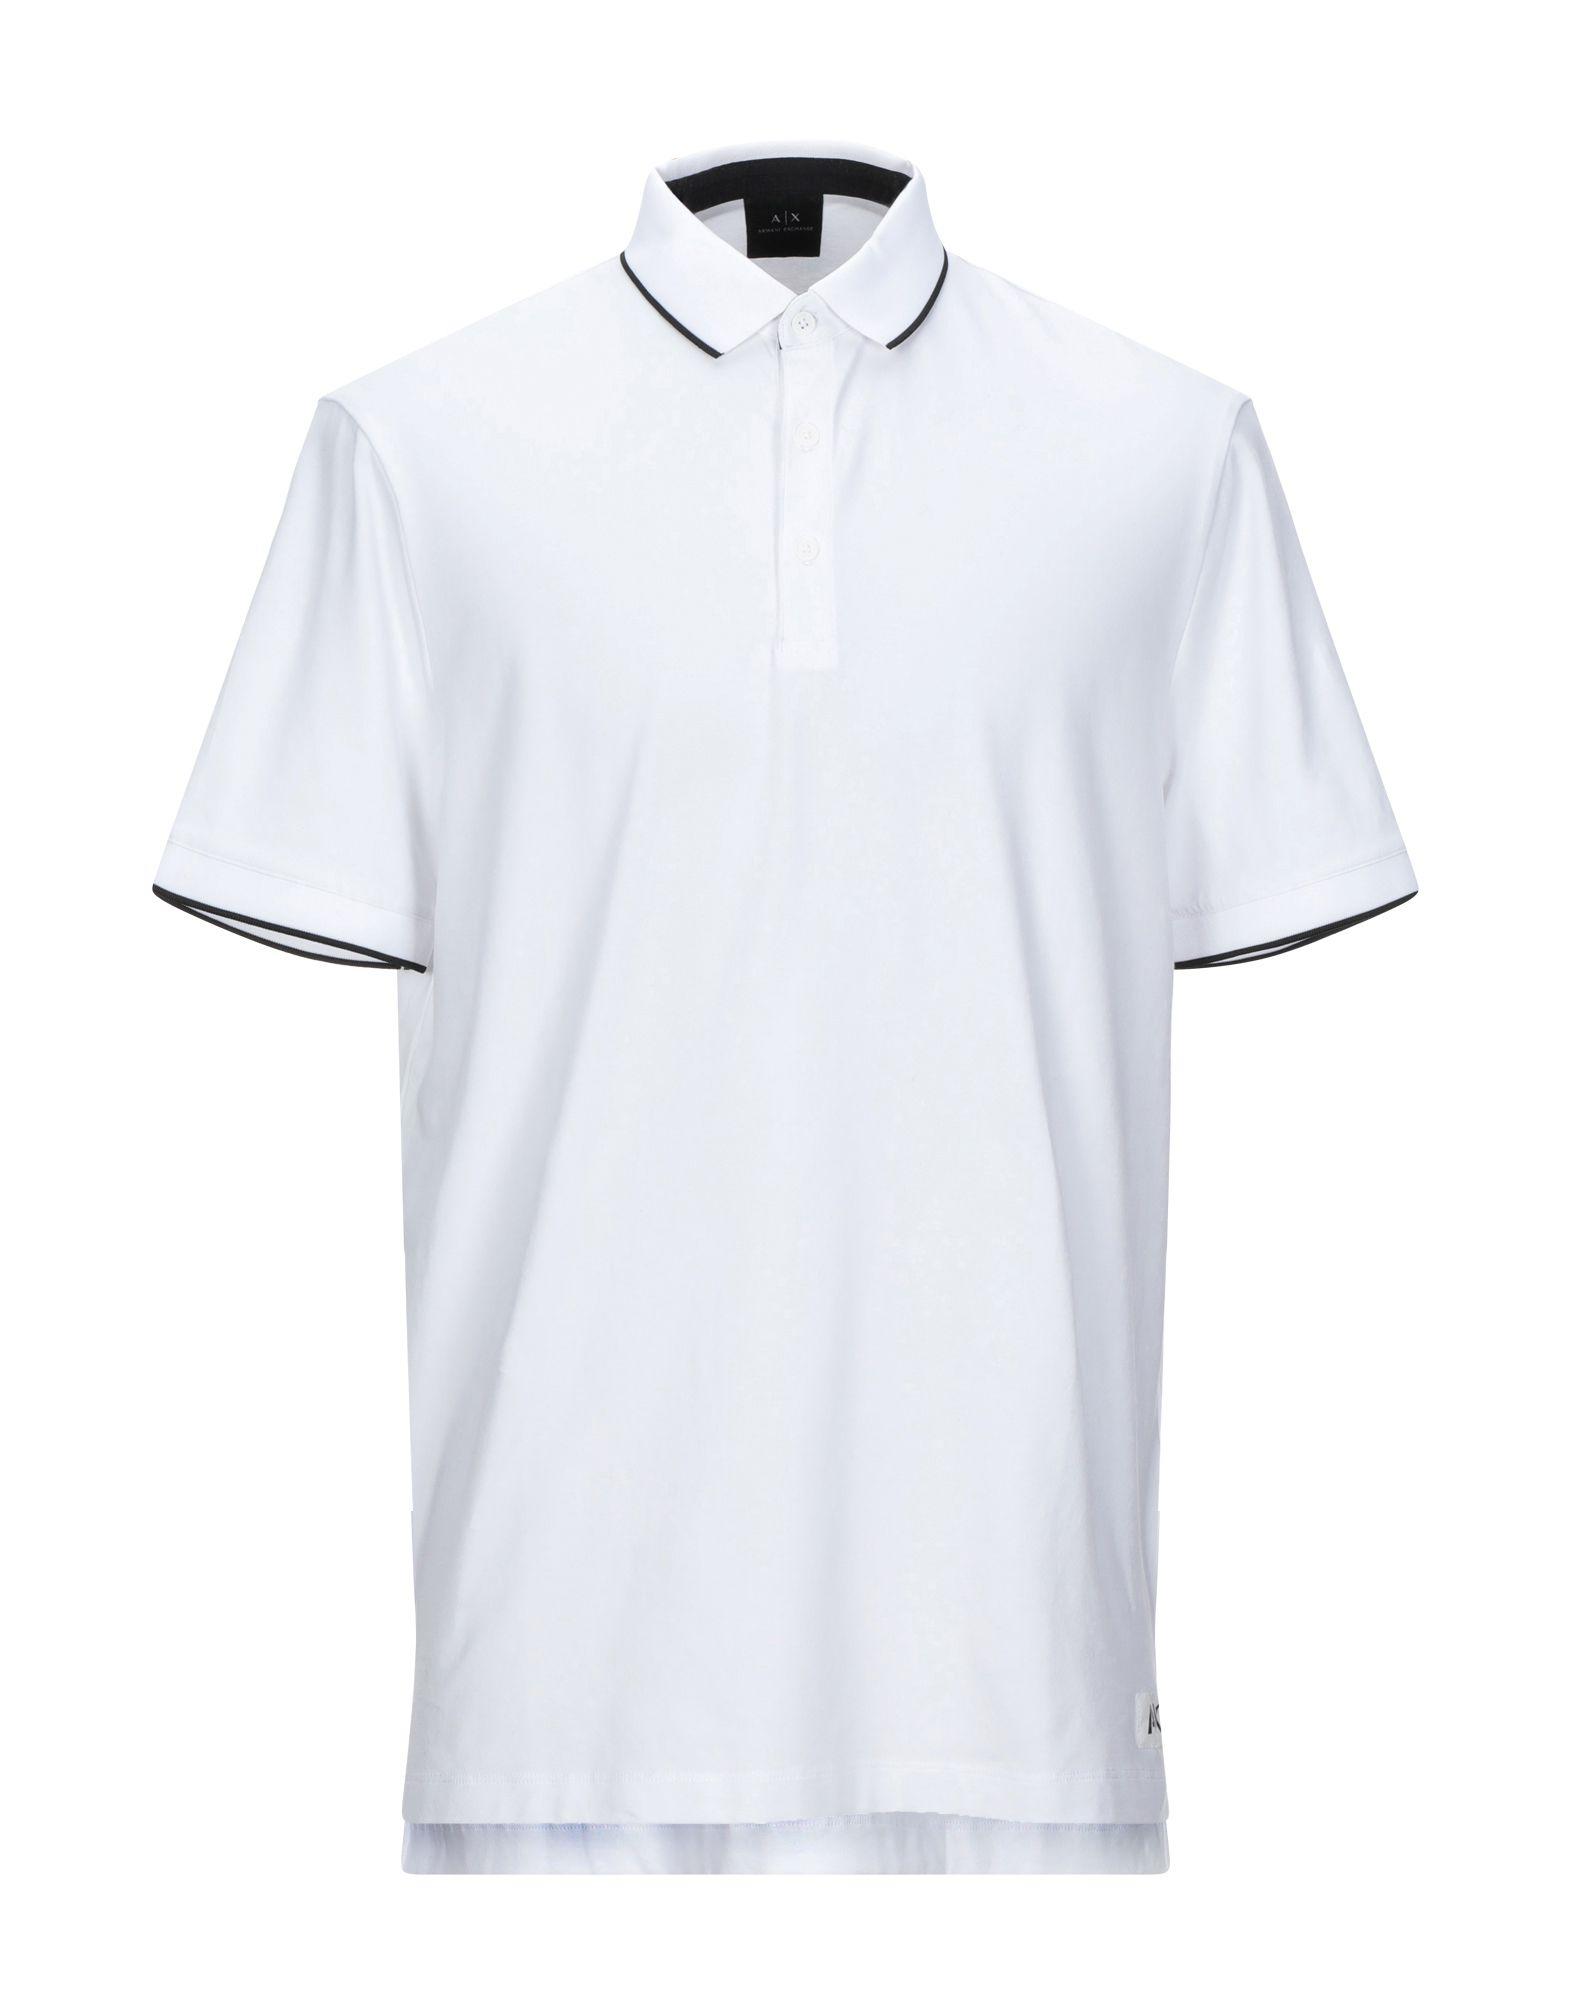 Armani Exchange Cotton Polo Shirt in White for Men - Lyst